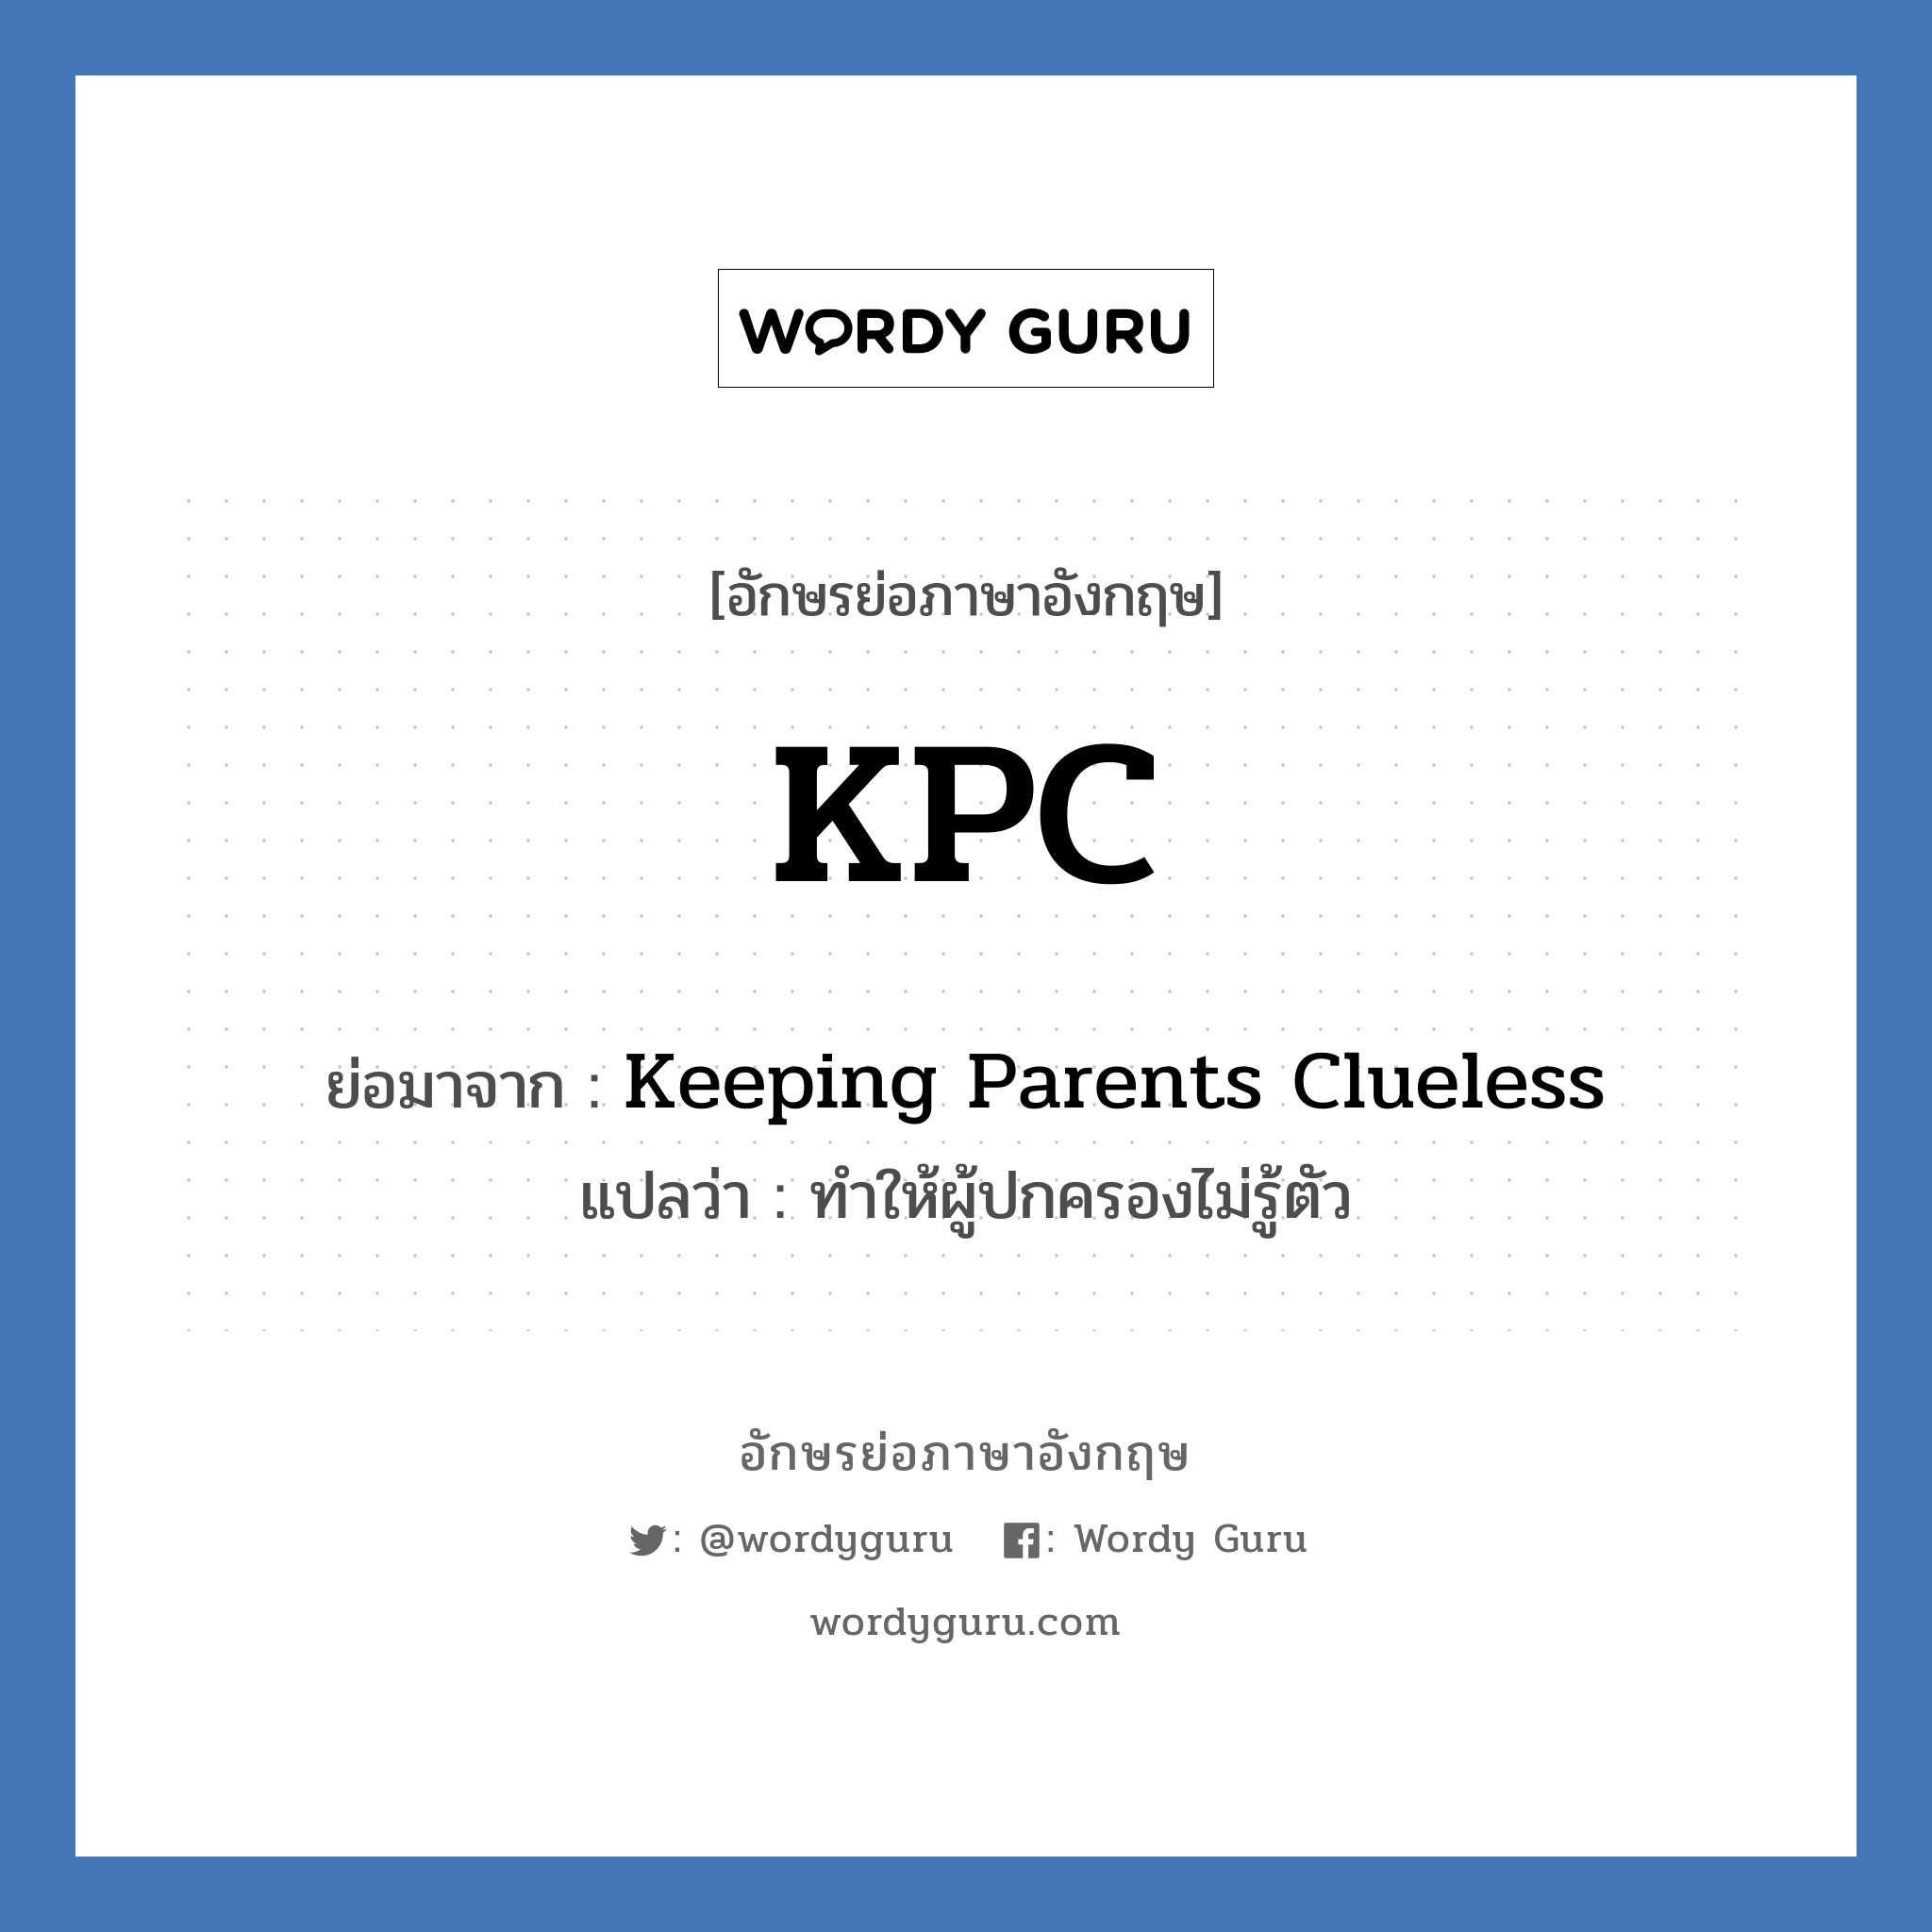 Keeping Parents Clueless คำย่อคือ? แปลว่า?, อักษรย่อภาษาอังกฤษ Keeping Parents Clueless ย่อมาจาก KPC แปลว่า ทำให้ผู้ปกครองไม่รู้ตัว